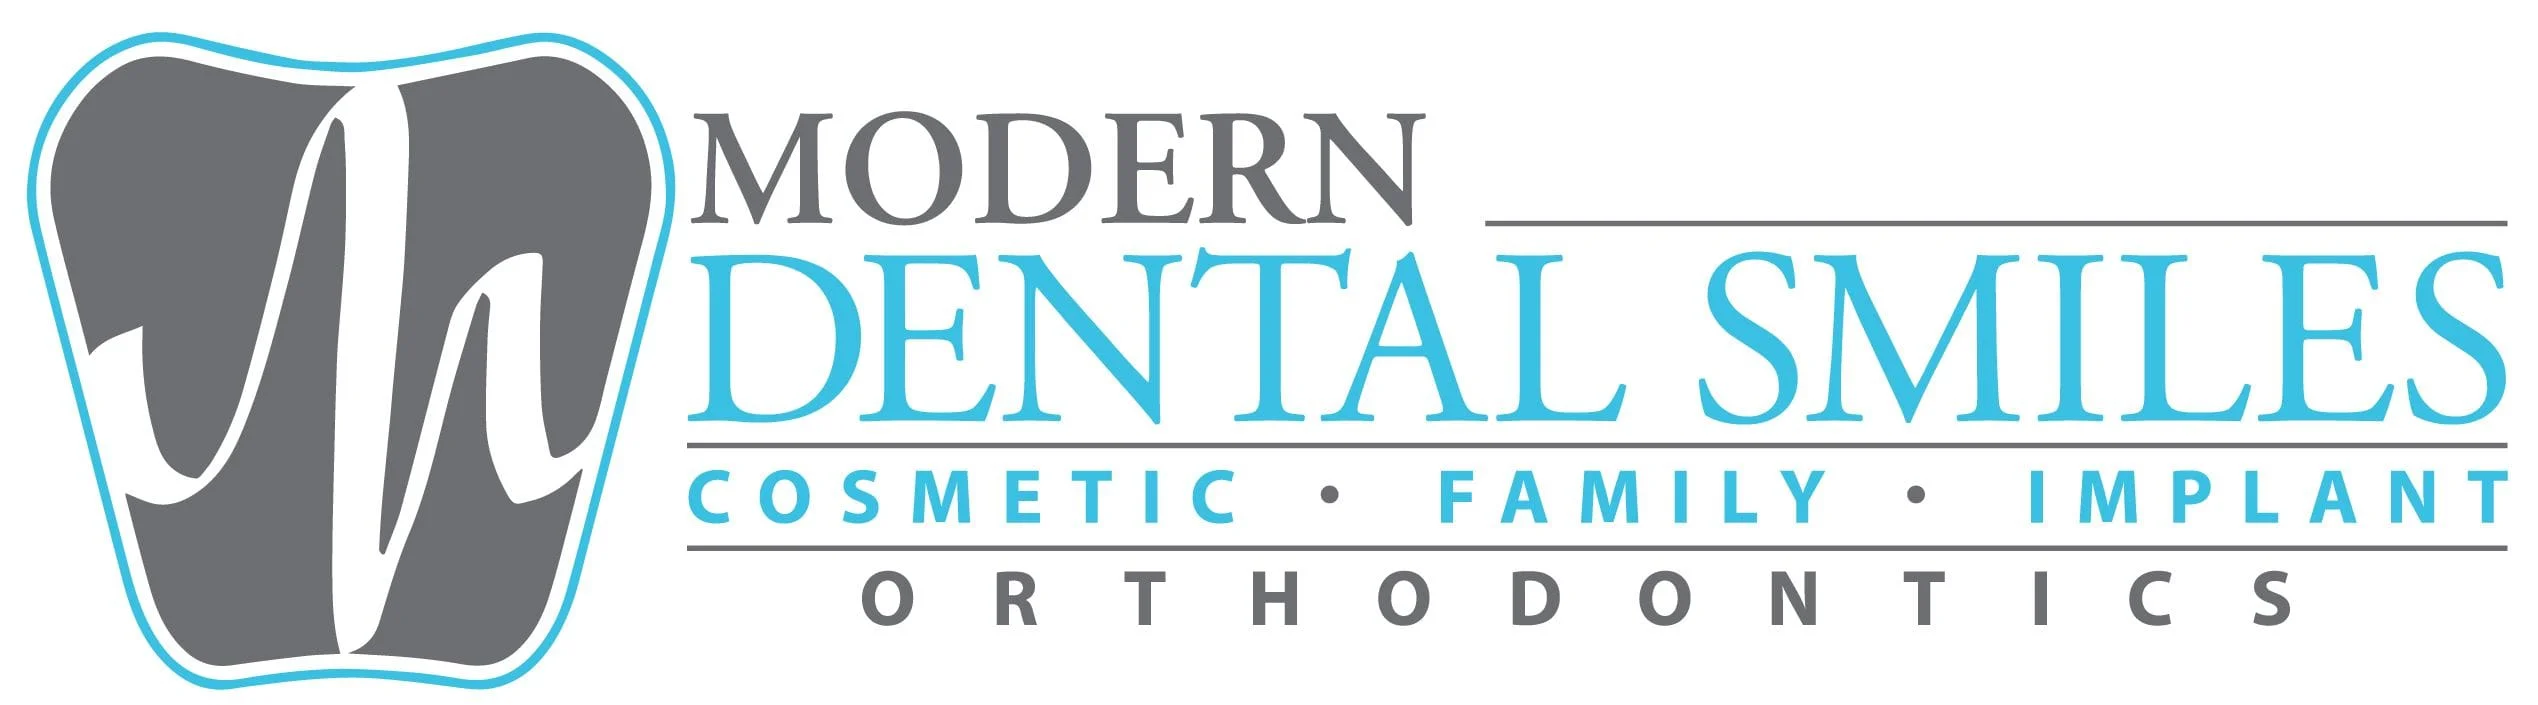 Modern Dental Smiles Cosmetic Family Implant Orthodontics